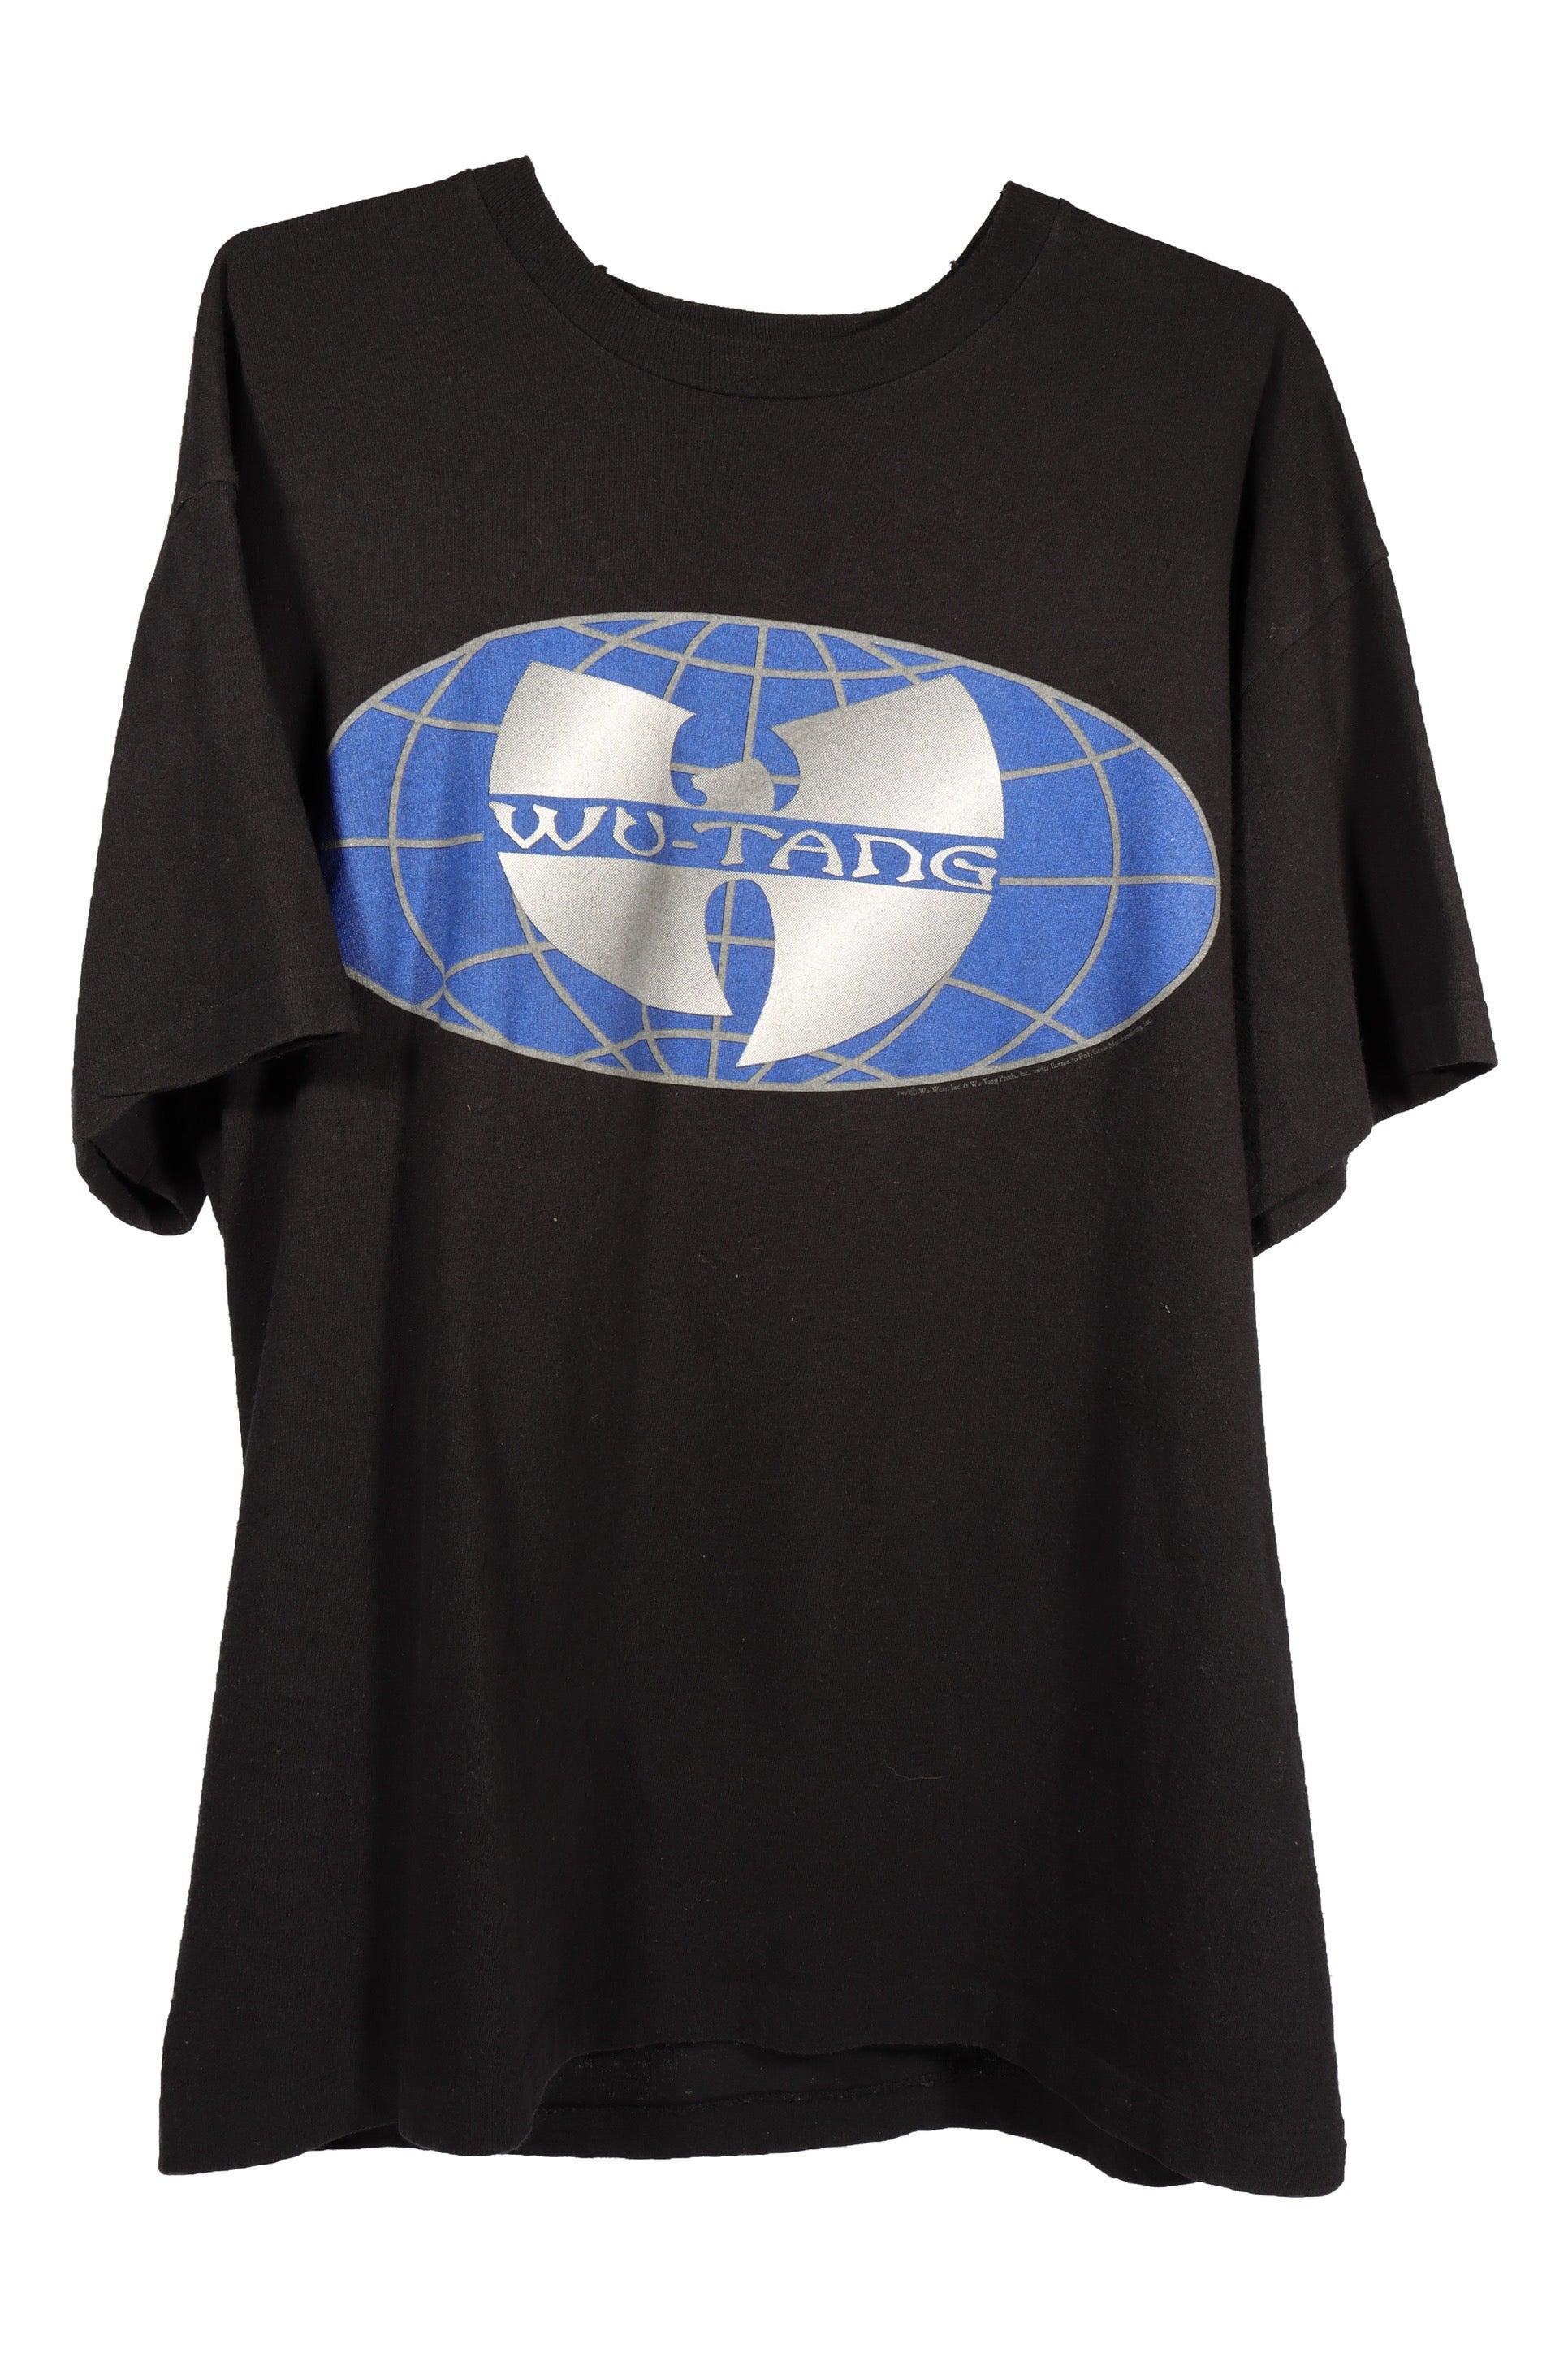 Wu Tang Forever Globe UK (Euro Version)